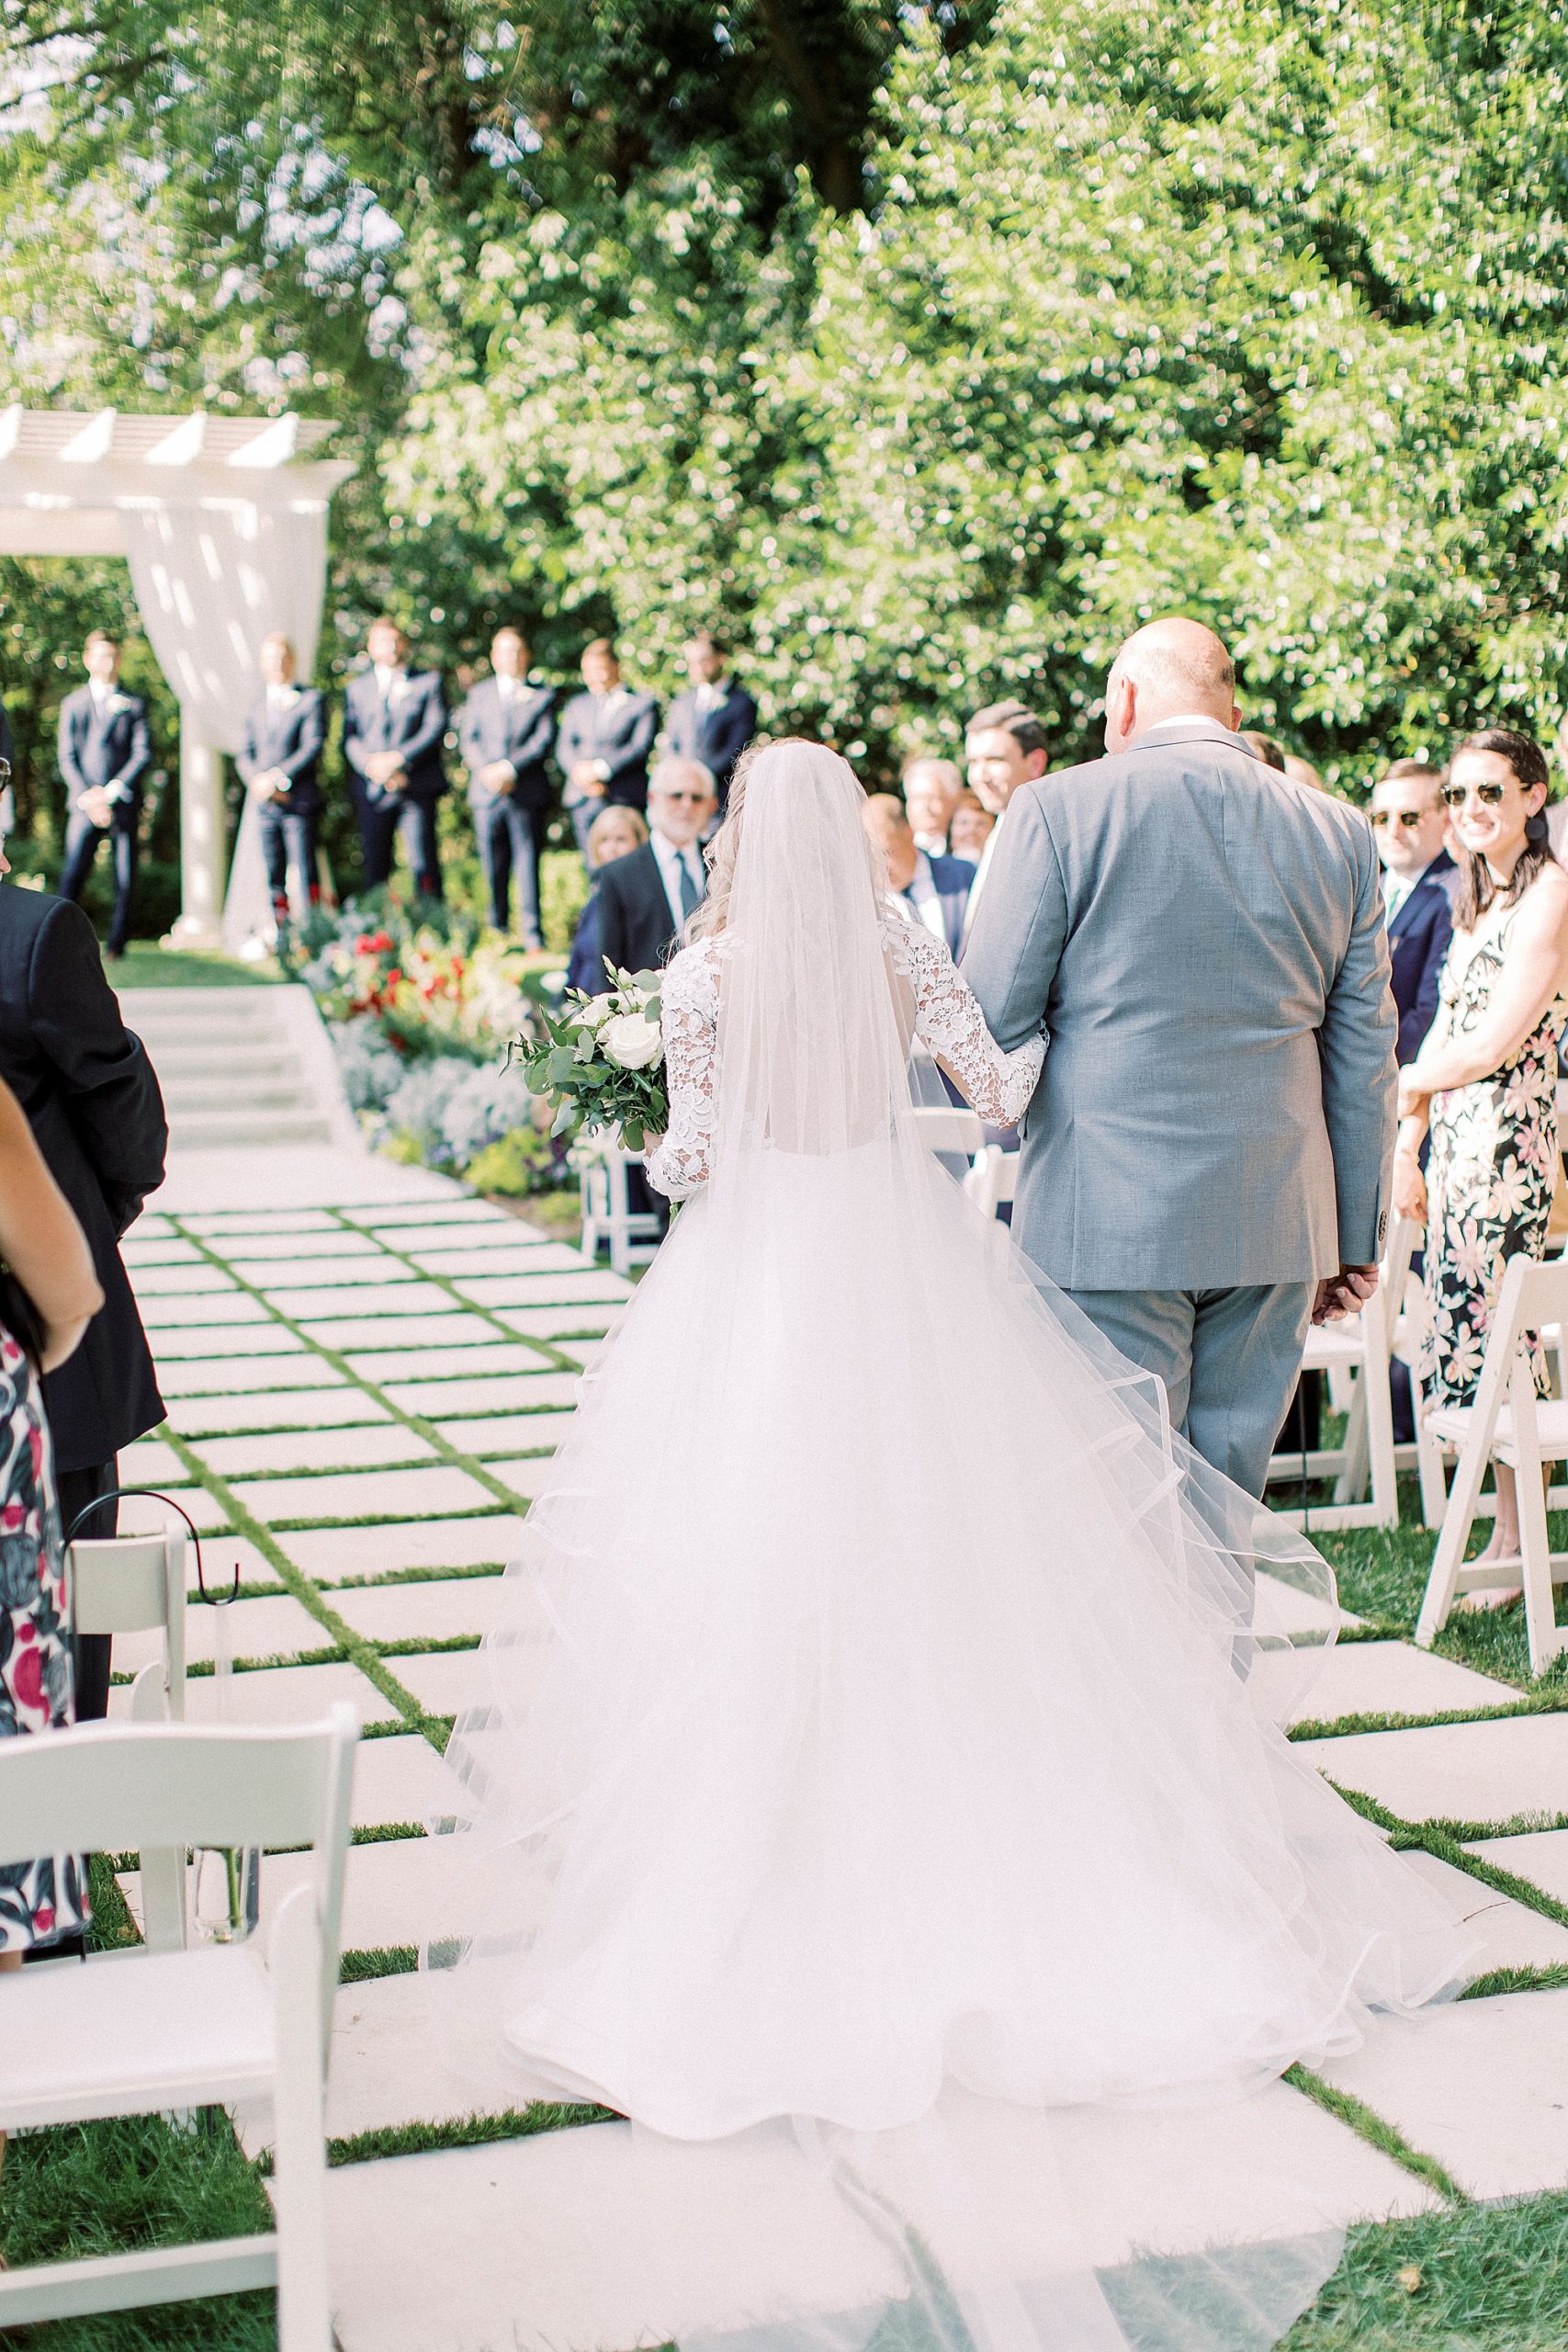 bride in Hayden Olivia bridal gown walks into garden wedding ceremony at Separk Mansion